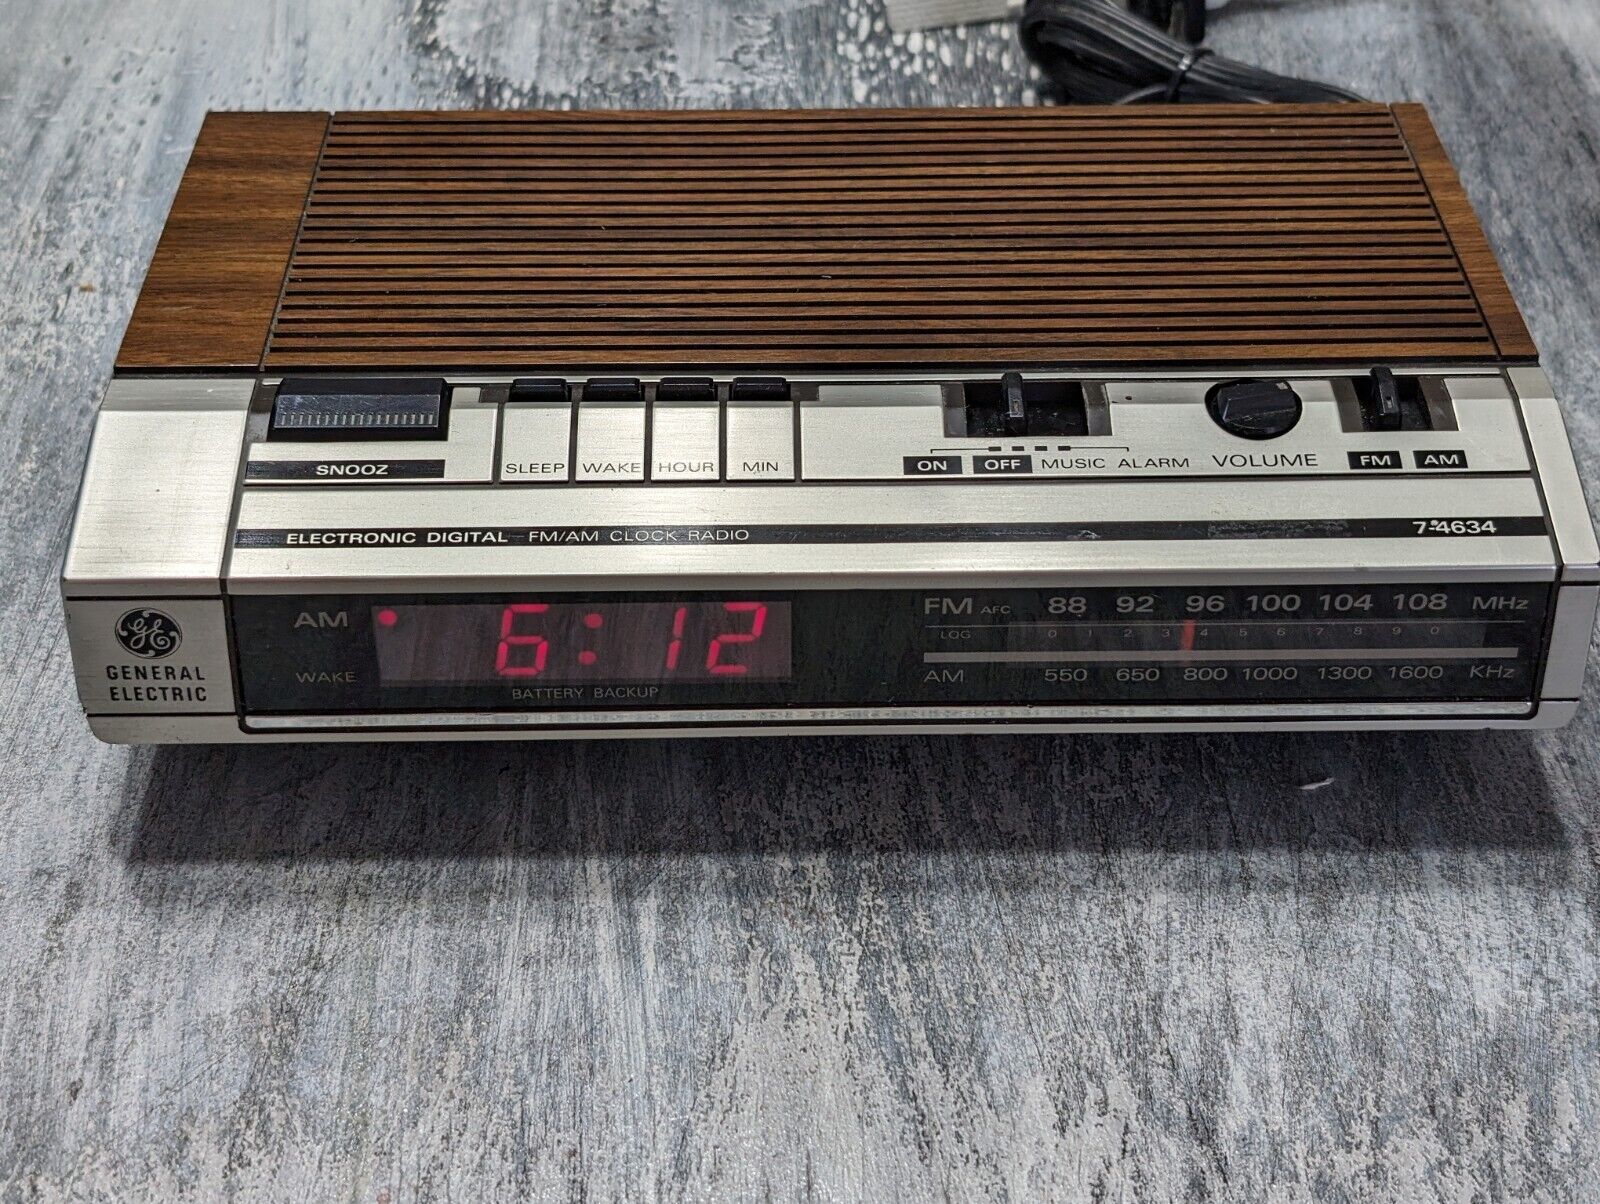 Vintage GE General Electric Clock Radio AM FM Alarm 7-4634A - Tested & Works